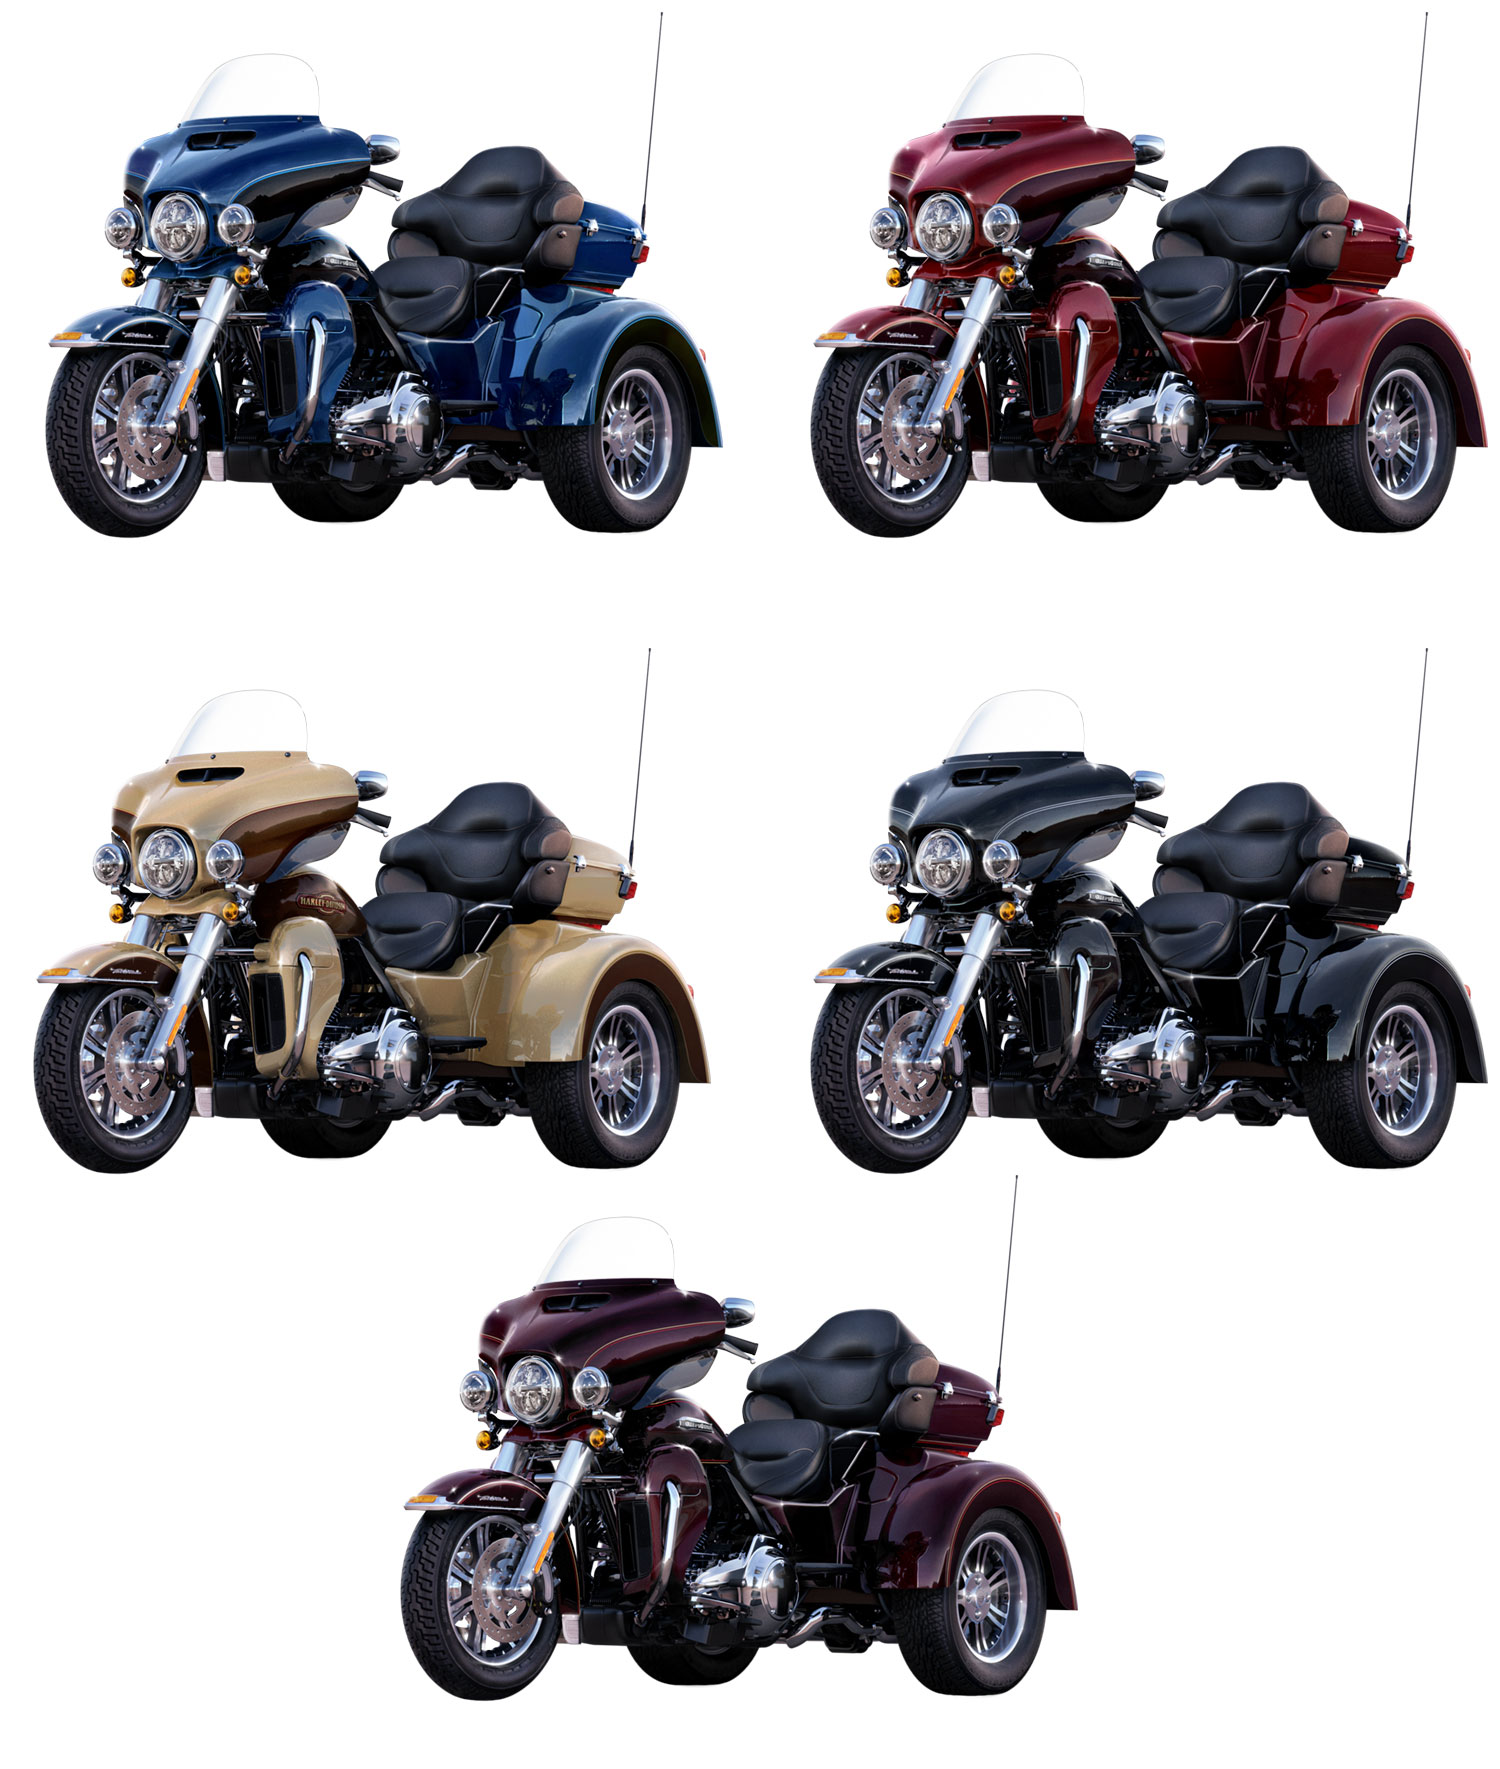 2014 Harley Davidson Paint Colors